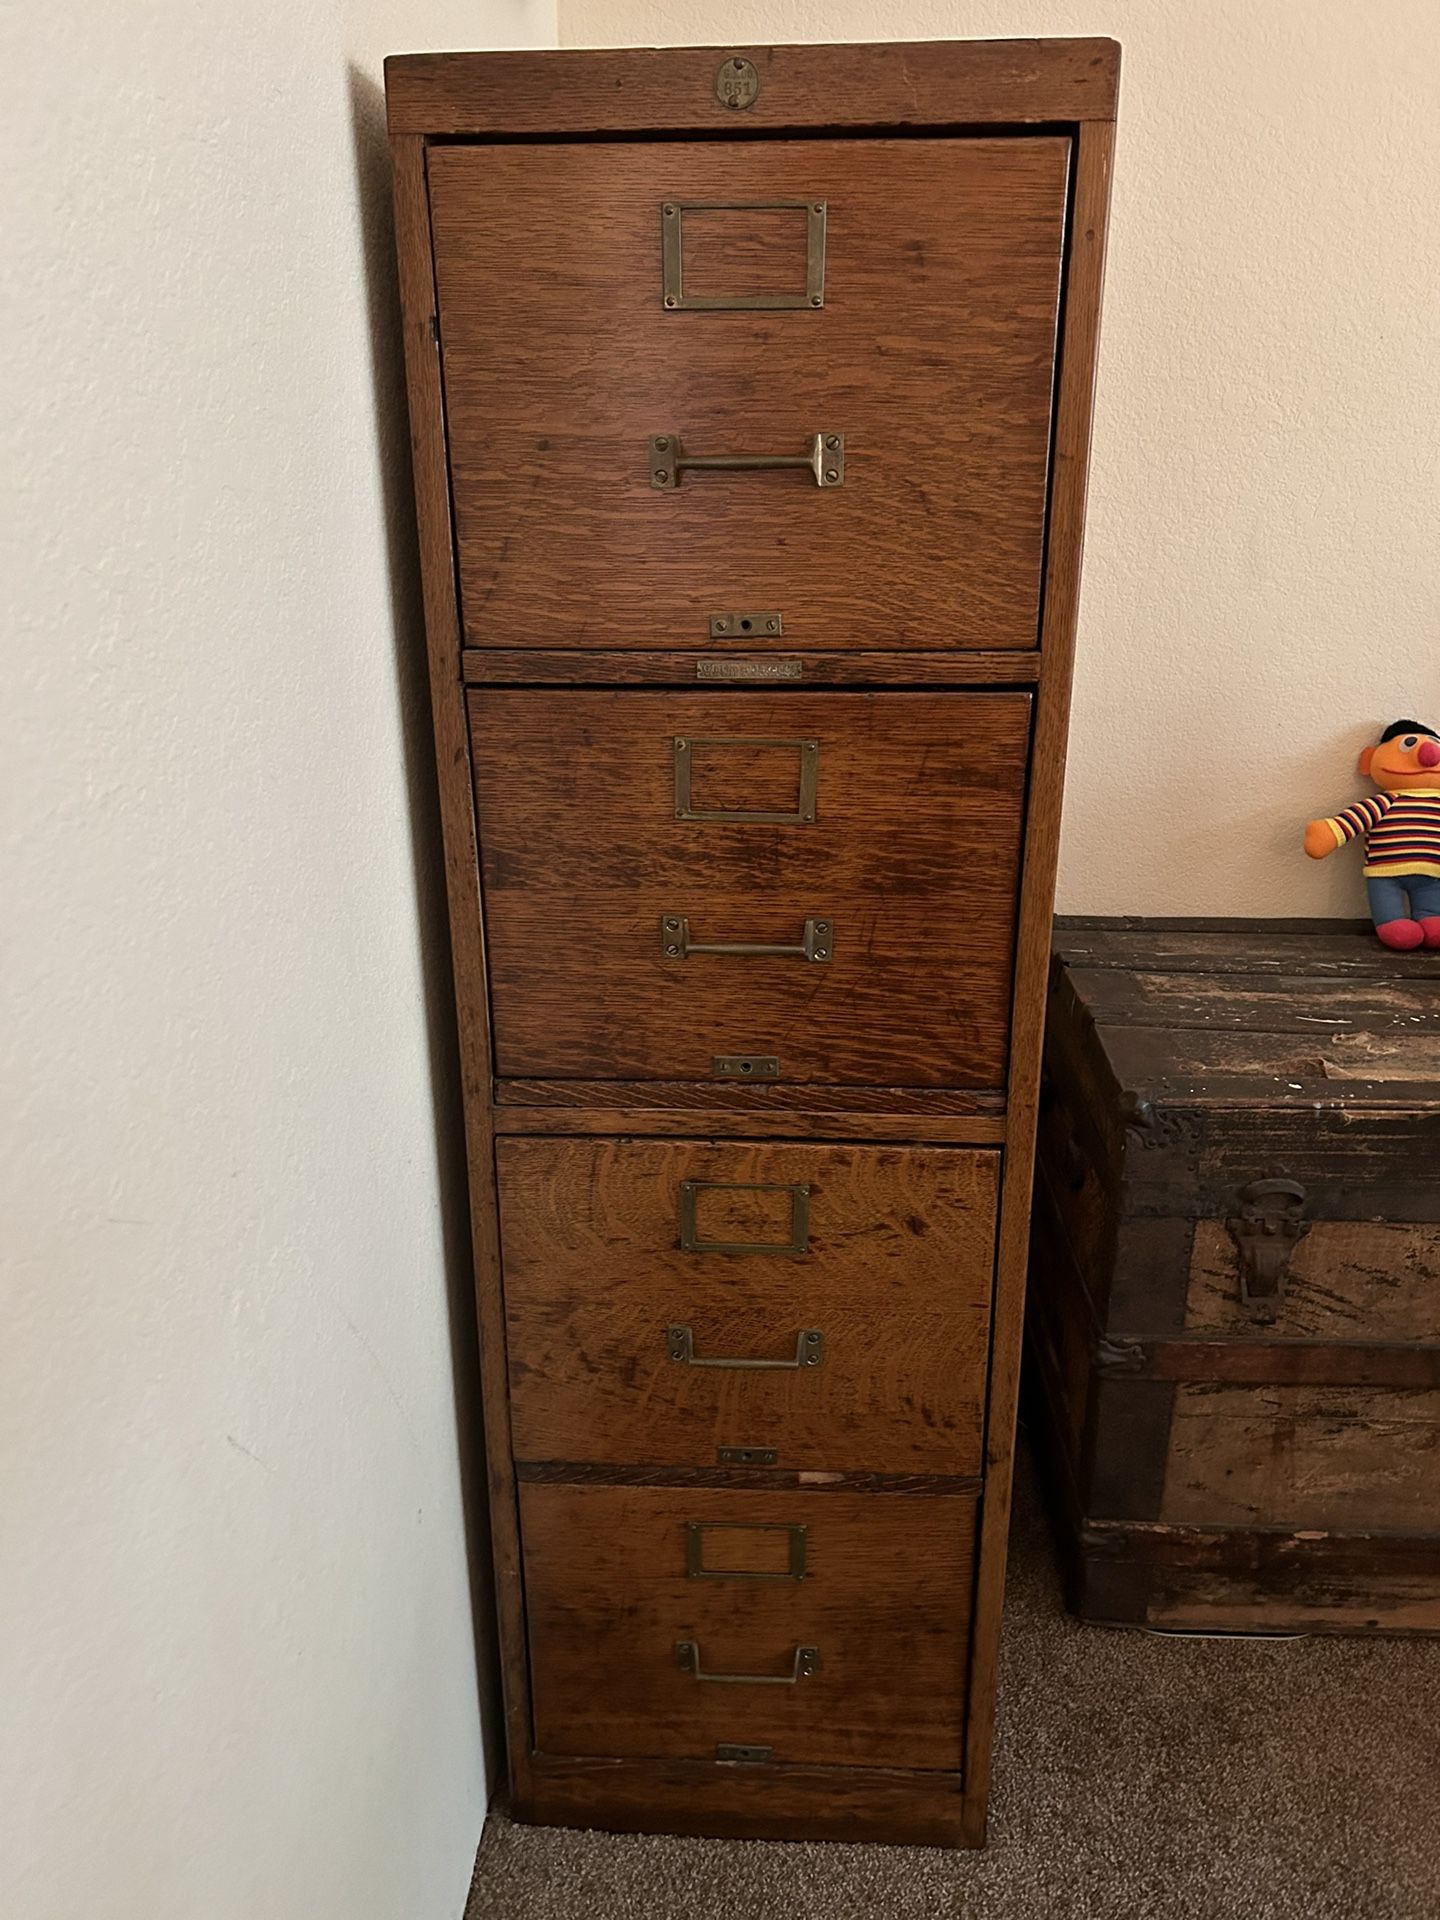 Antique File cabinets